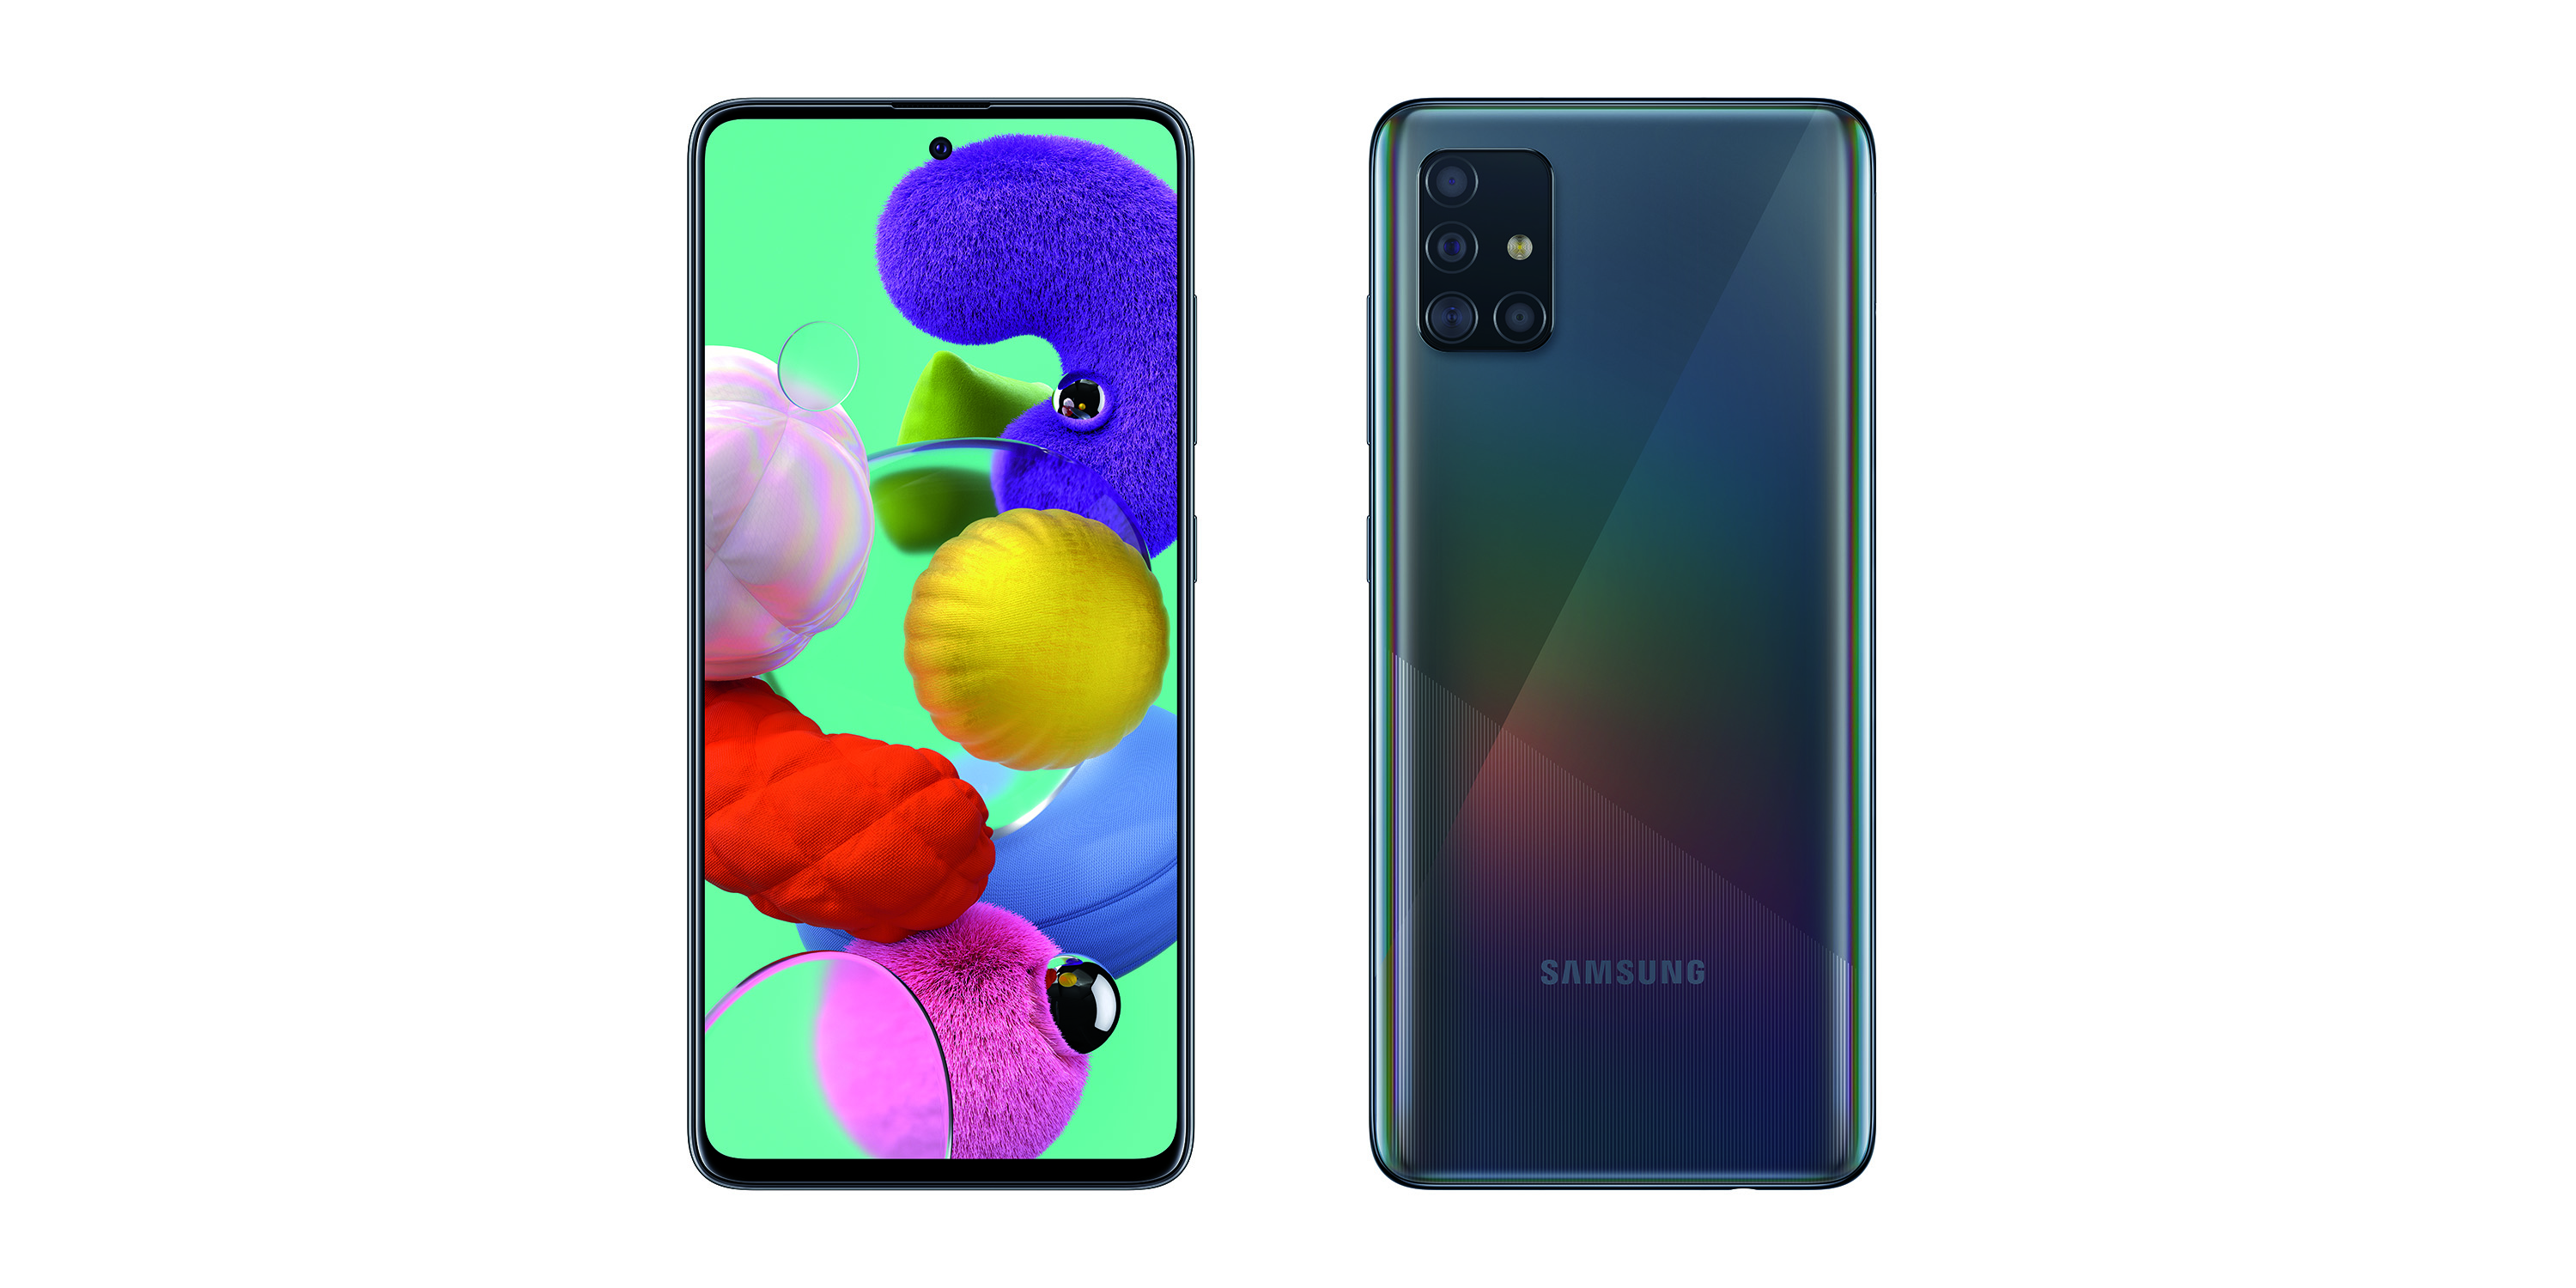 Samsung Galaxy A (2020) series debuts w/ Galaxy A51 5G - 9to5Google